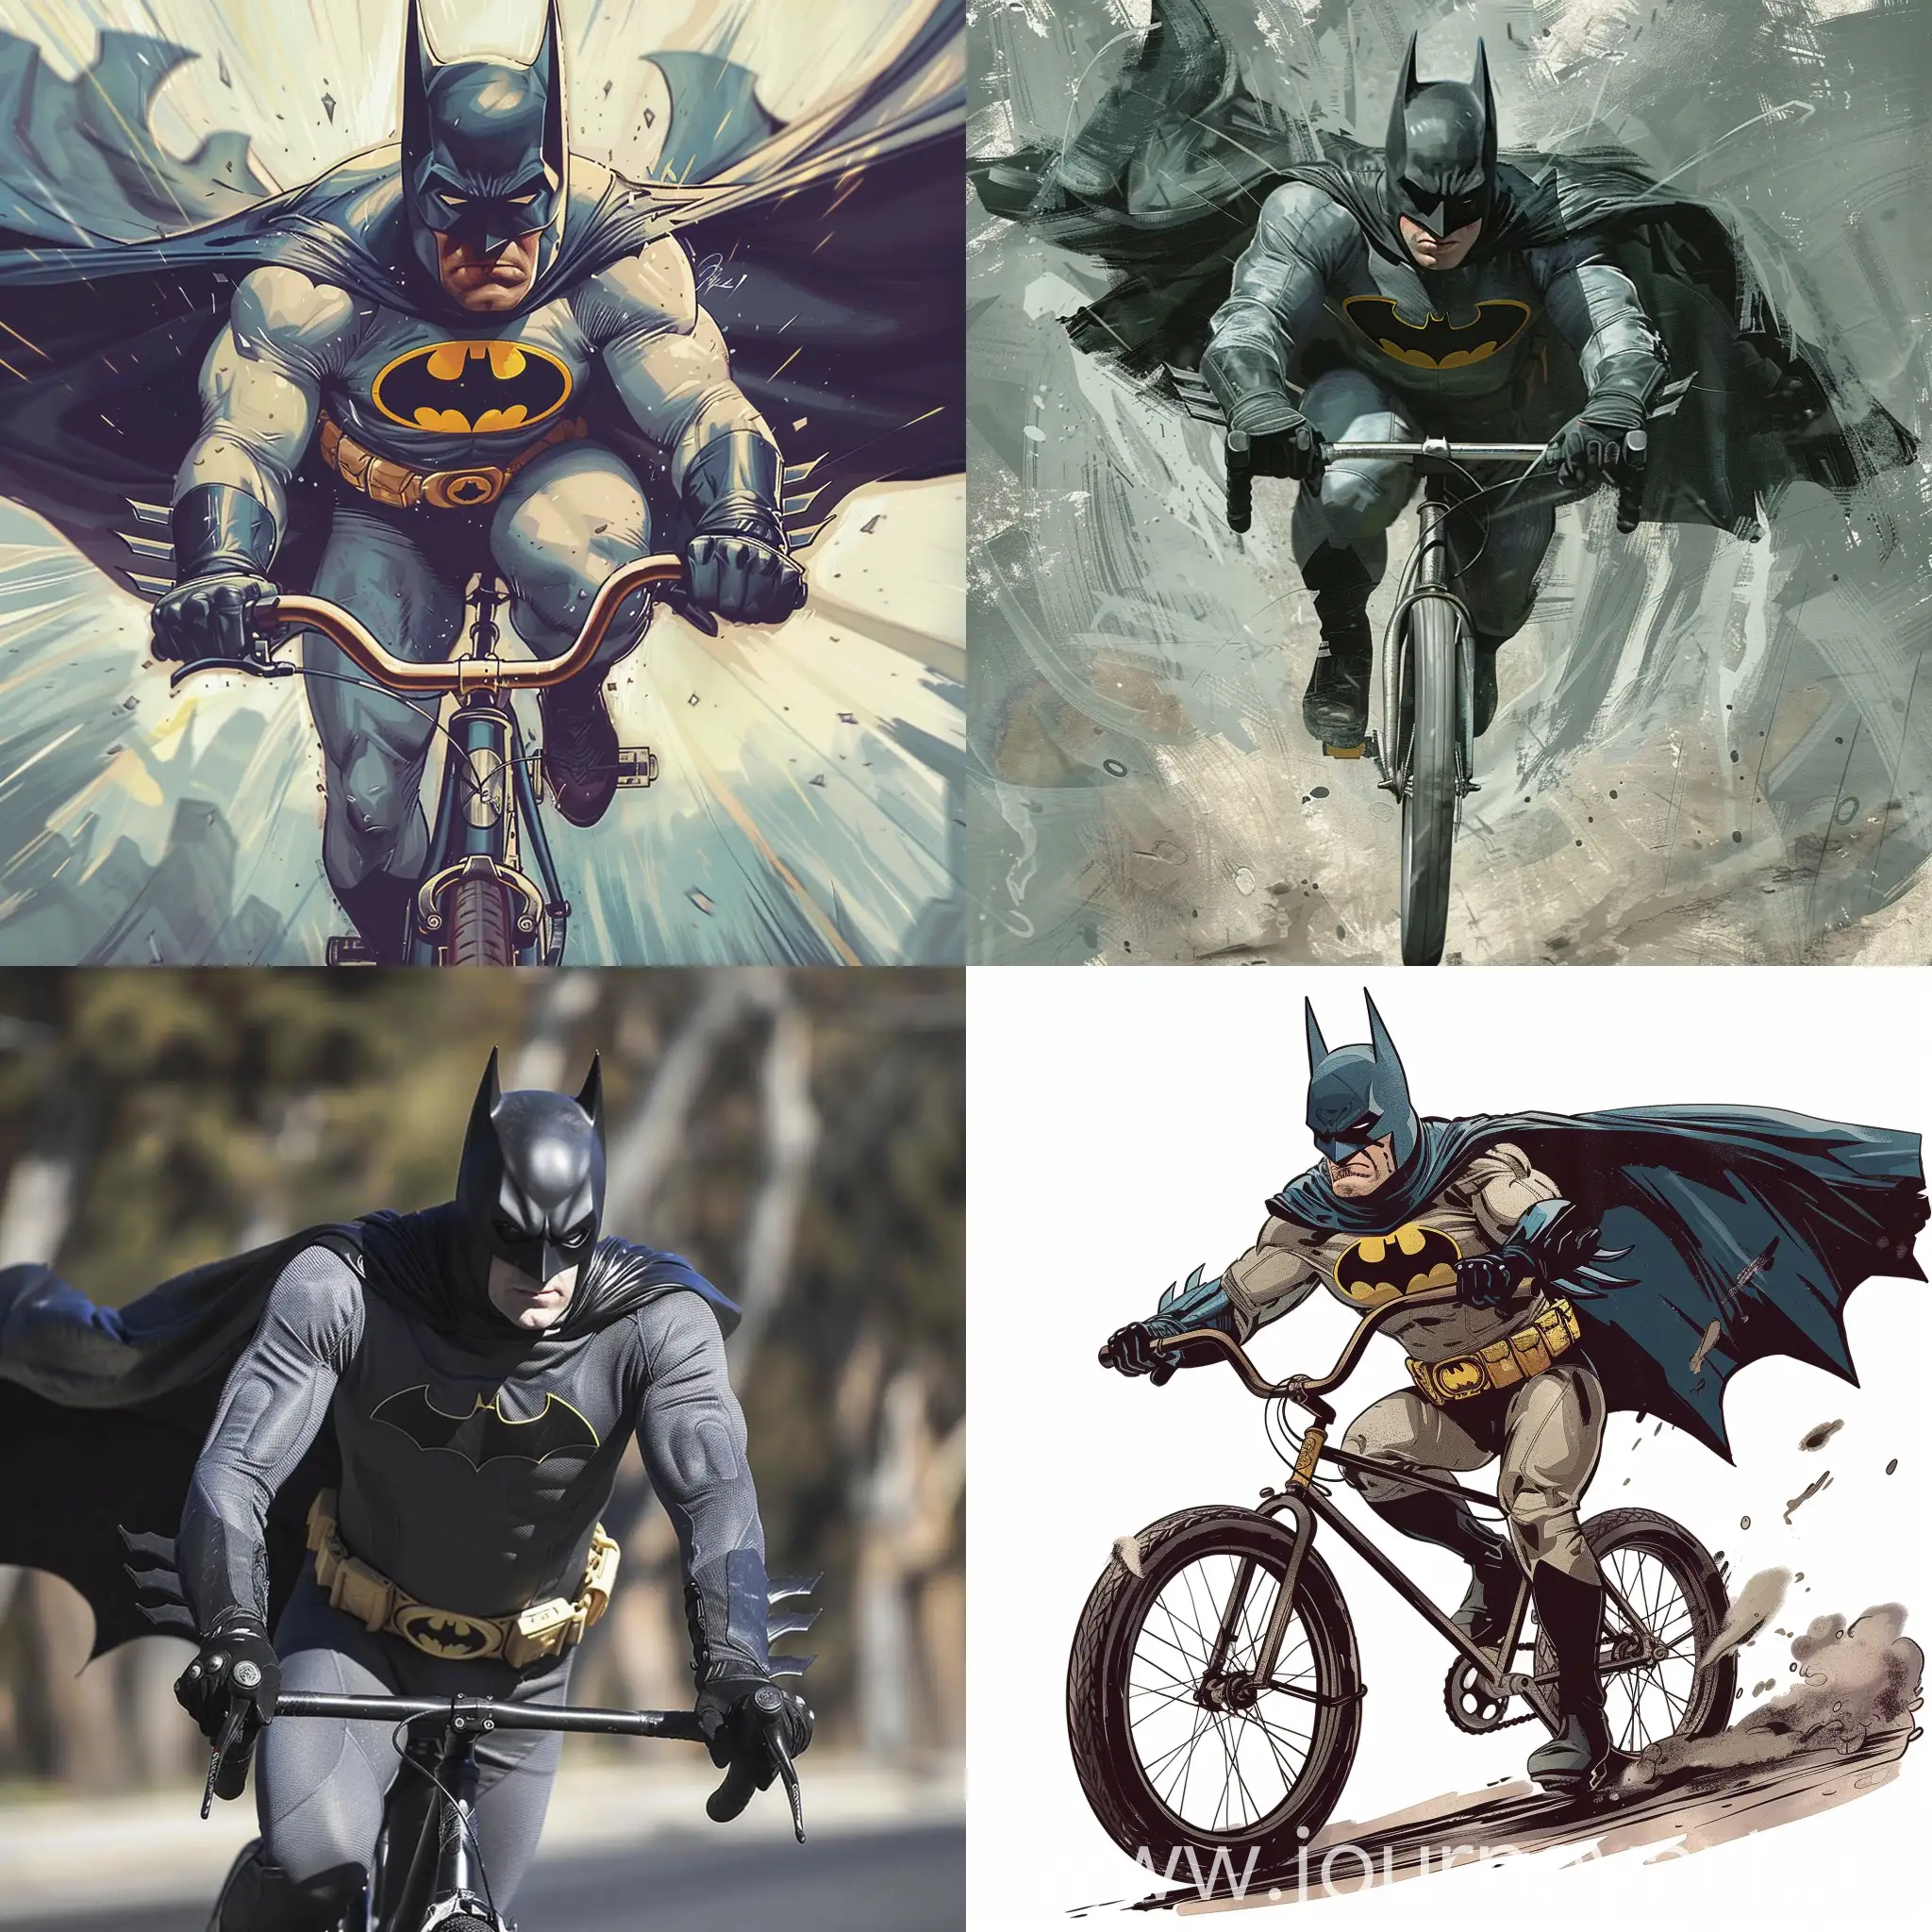 Batman-Riding-Bicycle-Through-Urban-Cityscape-at-Night